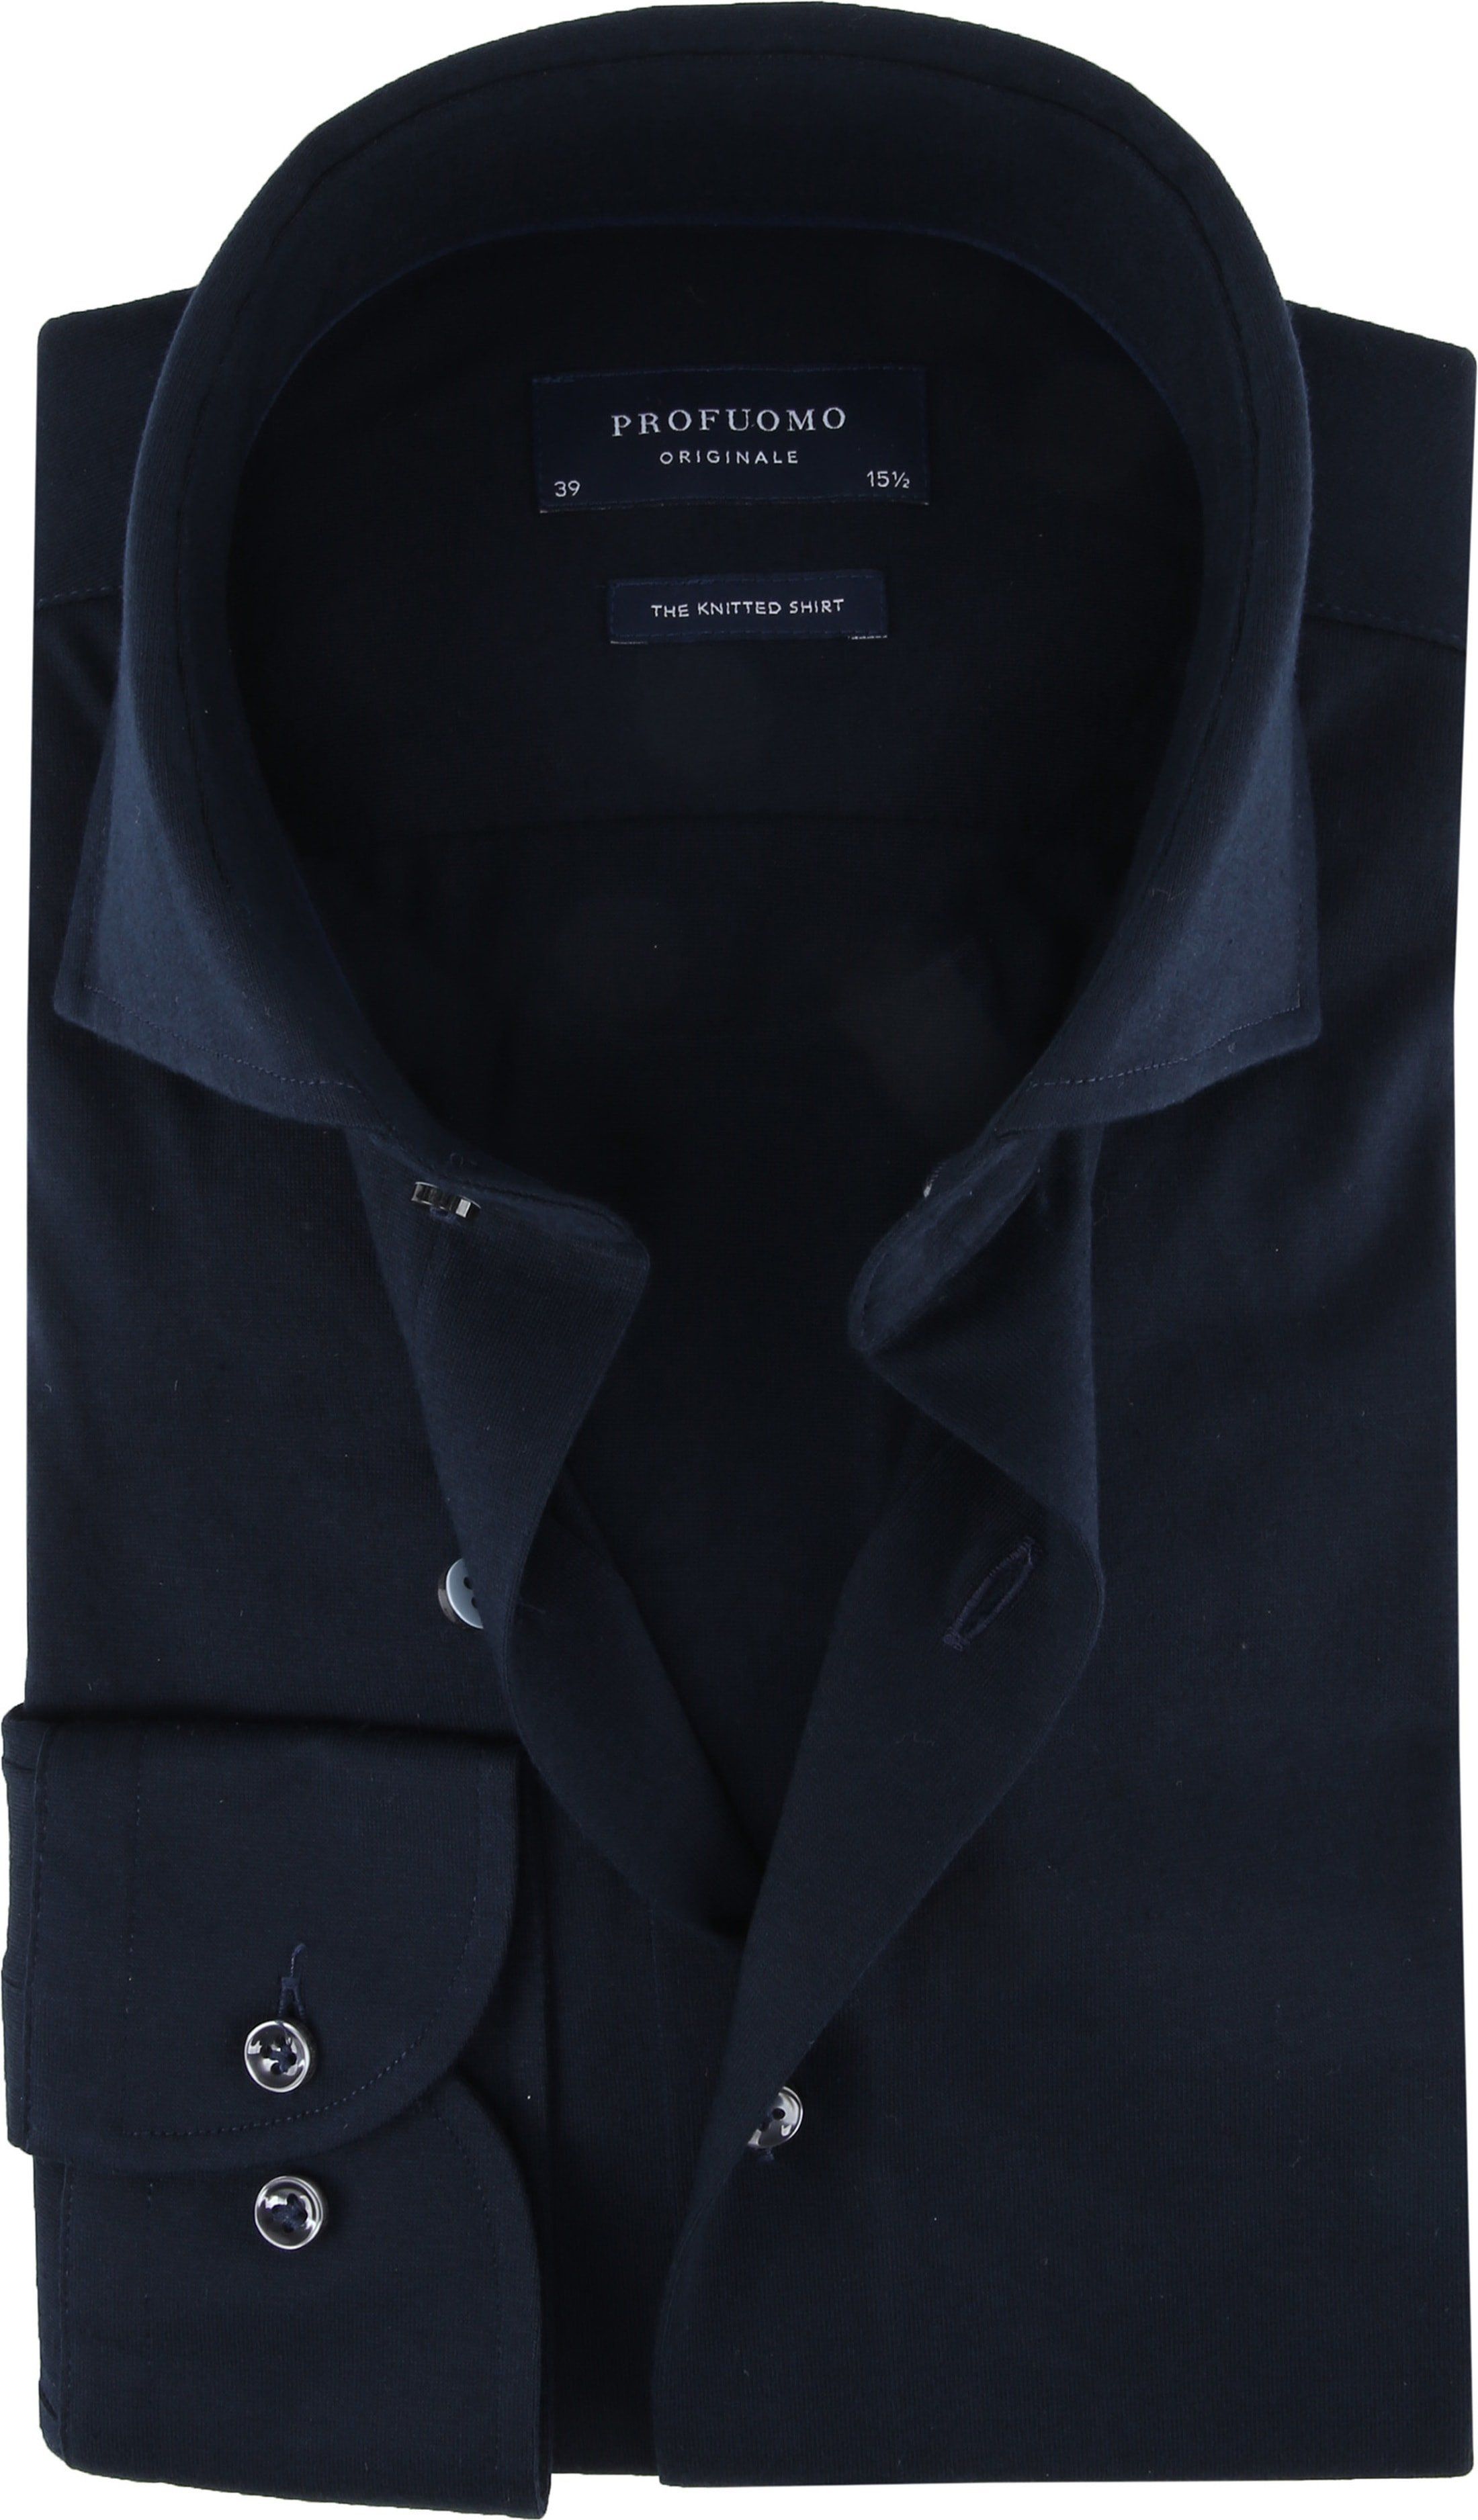 Profuomo Knitted Jersey Shirt Navy Dark Blue Blue size 17 1/2